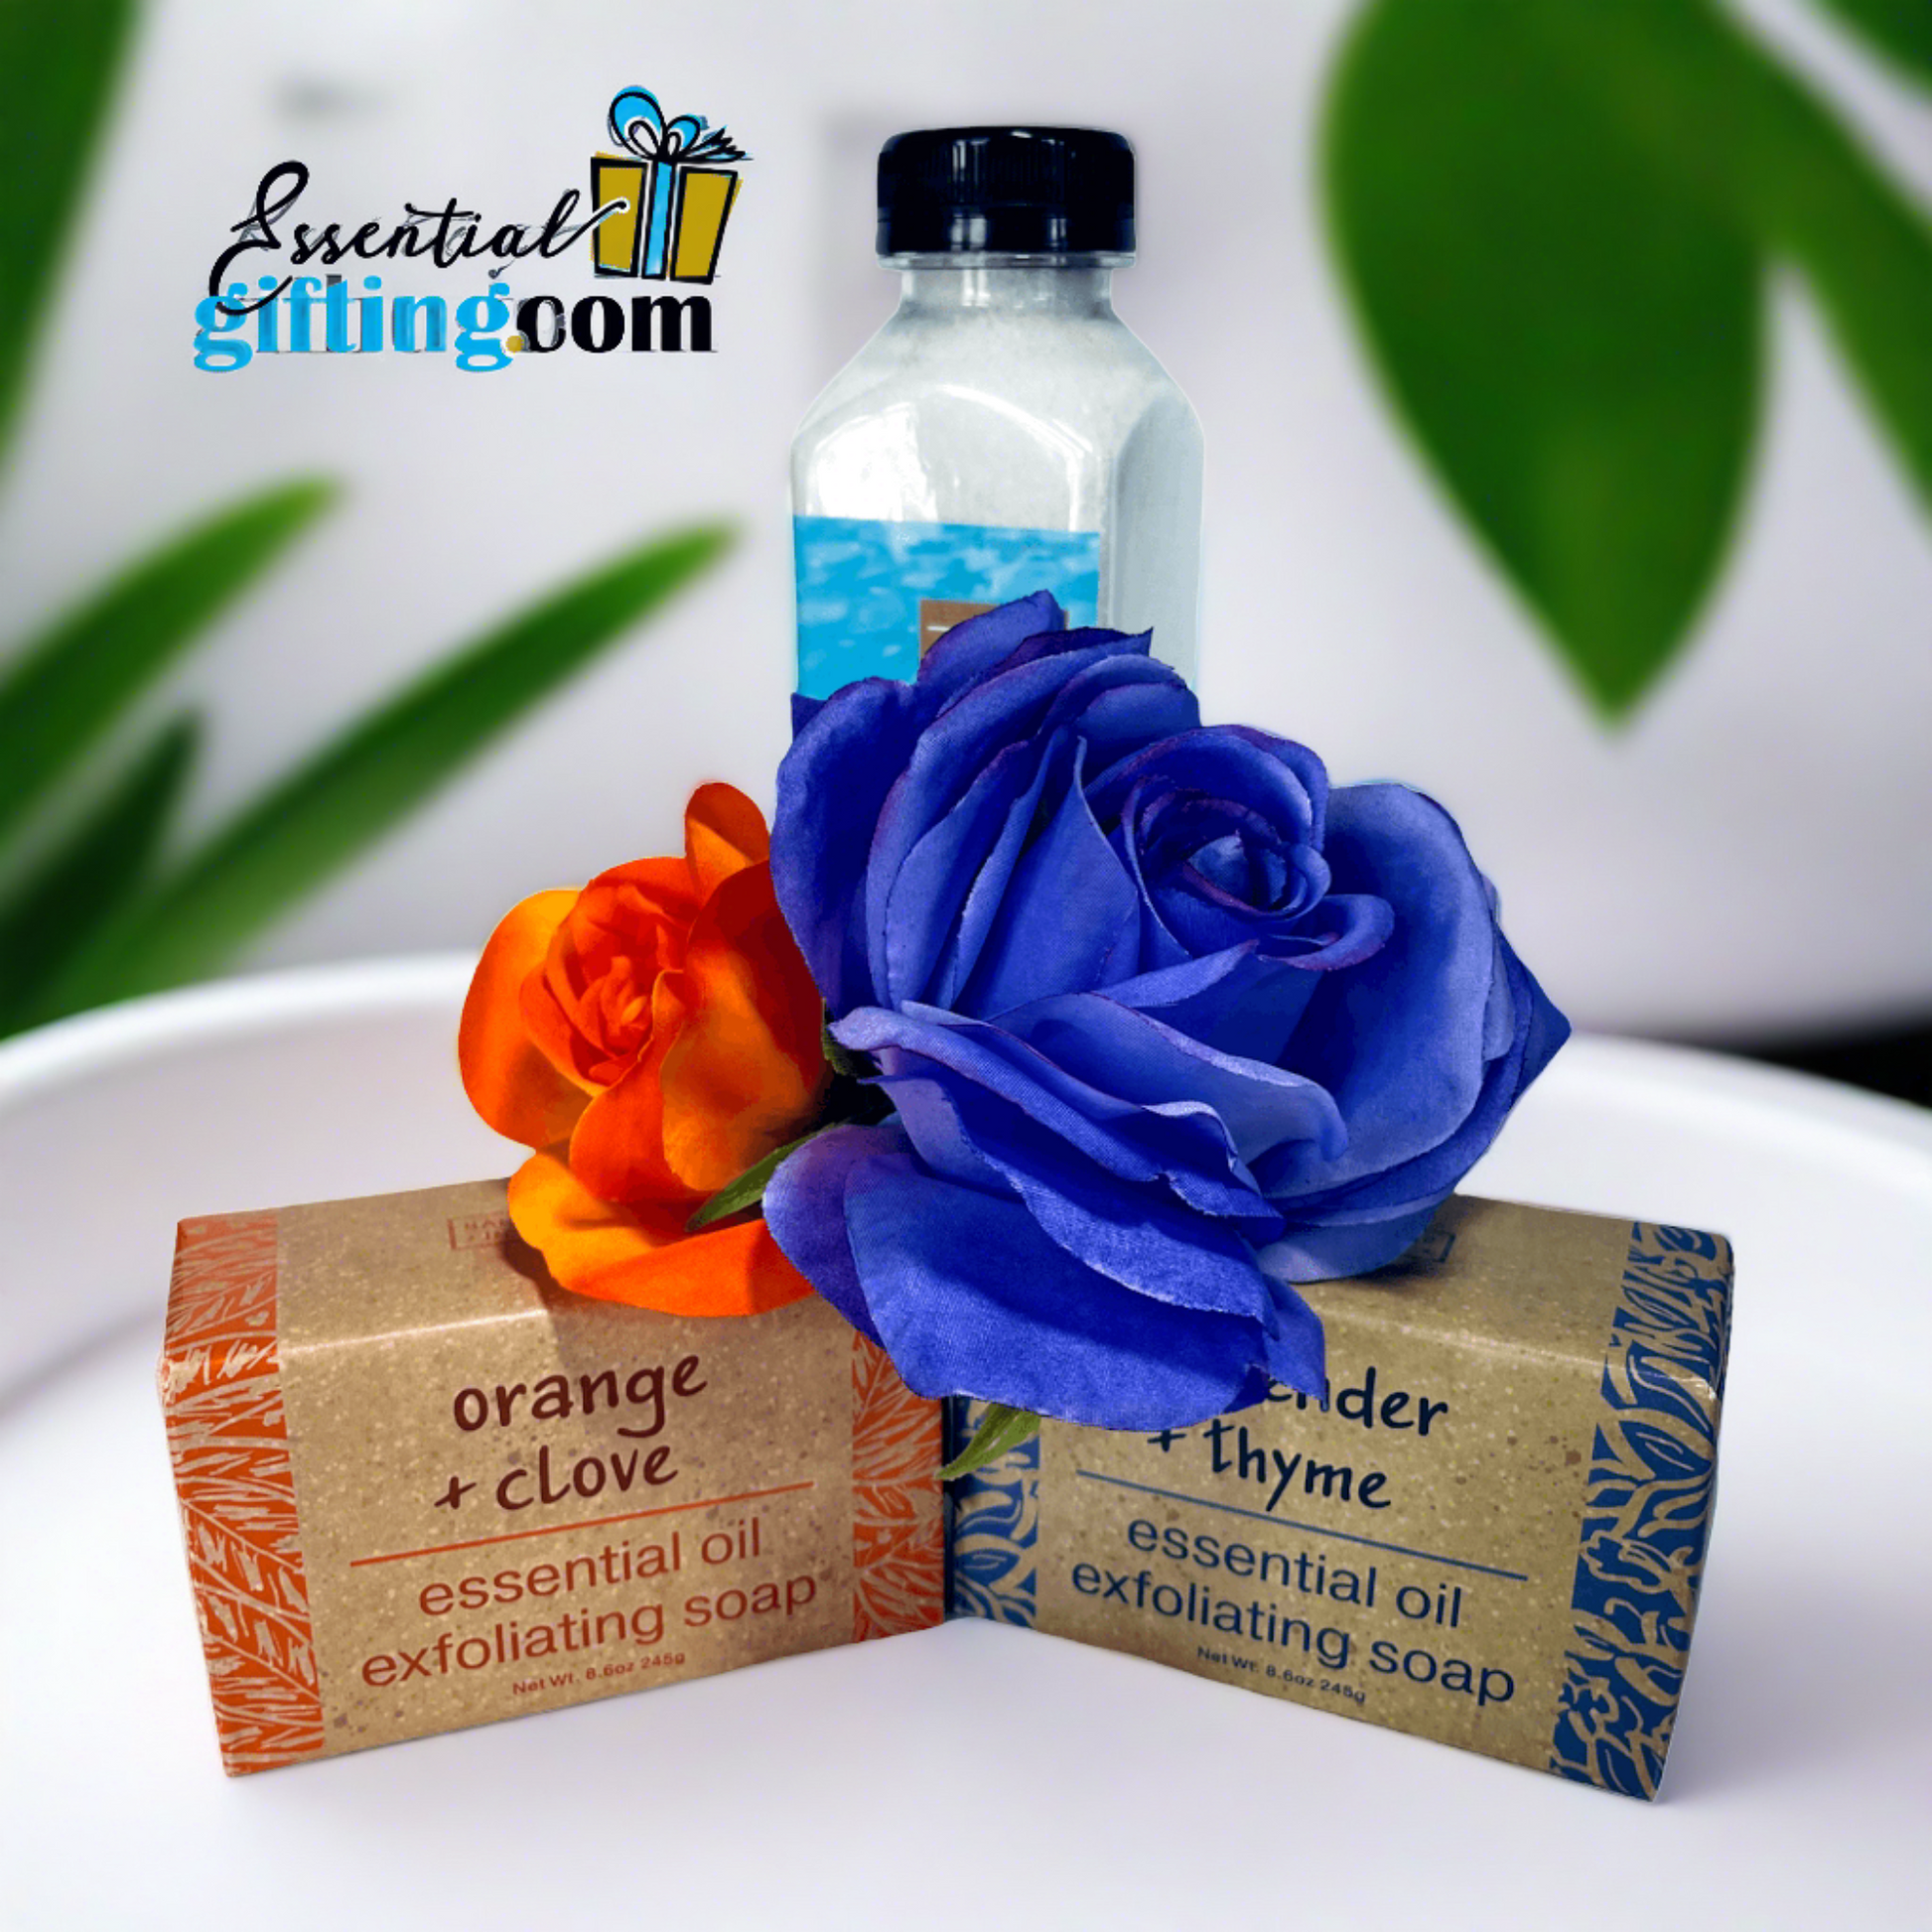 https://essentialgifting.com/products/bar-soap-exfoliating-bath-gift-set